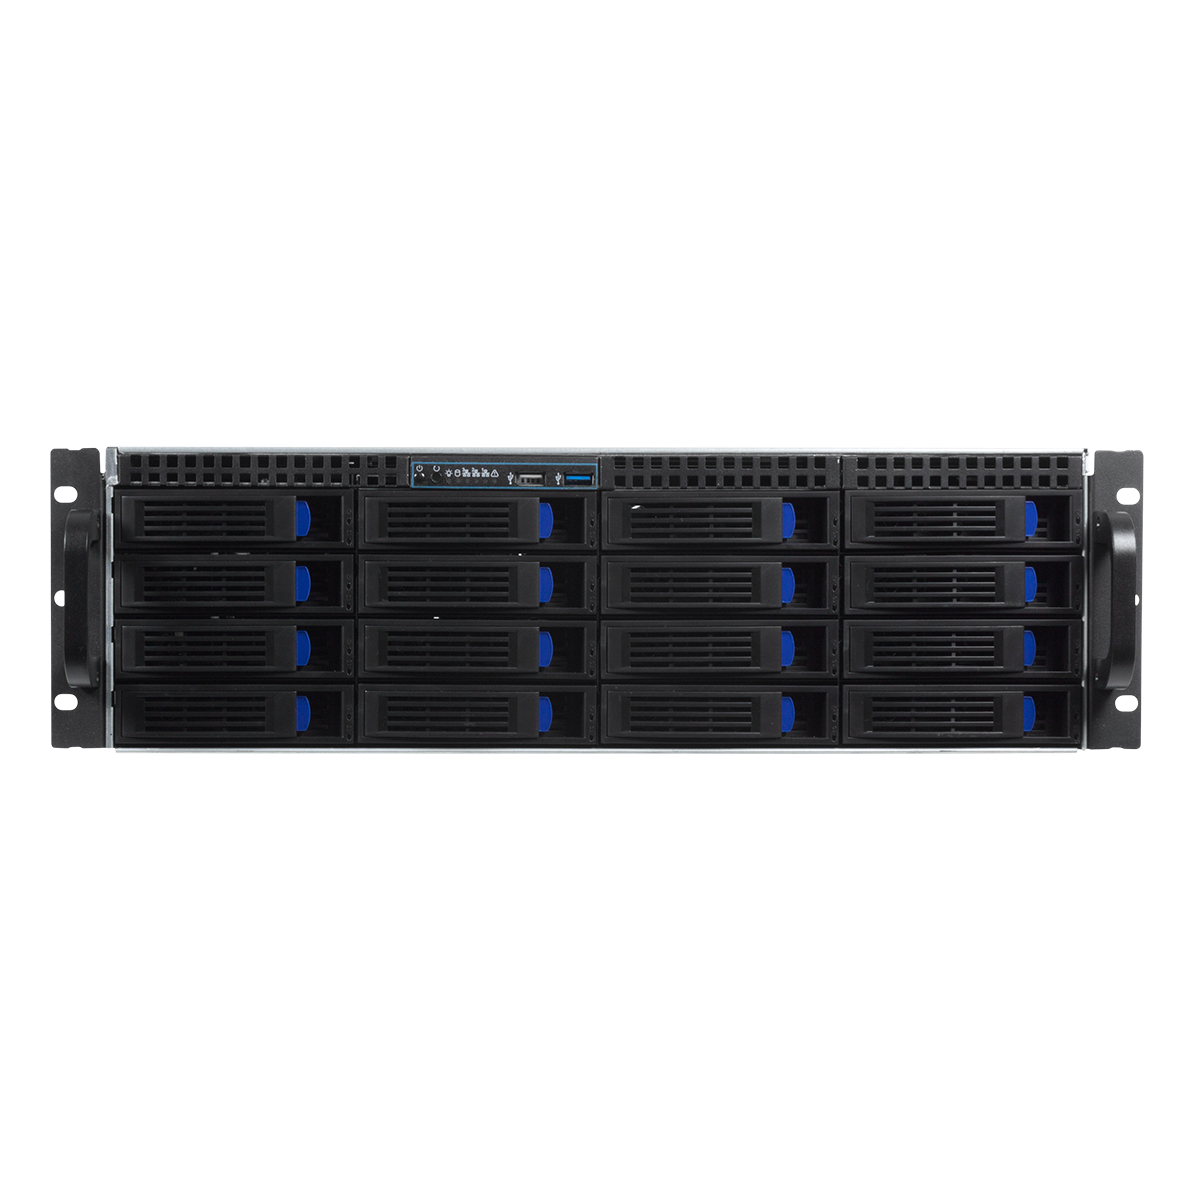 Unykach HSW4416 Server 3U Rack 16 Bays Hot Swap - Tailles de disque prises en charge 3,5" - Cartes mères compatibles EEB, CEB, ATX, MicroATX - USB-A 2.0